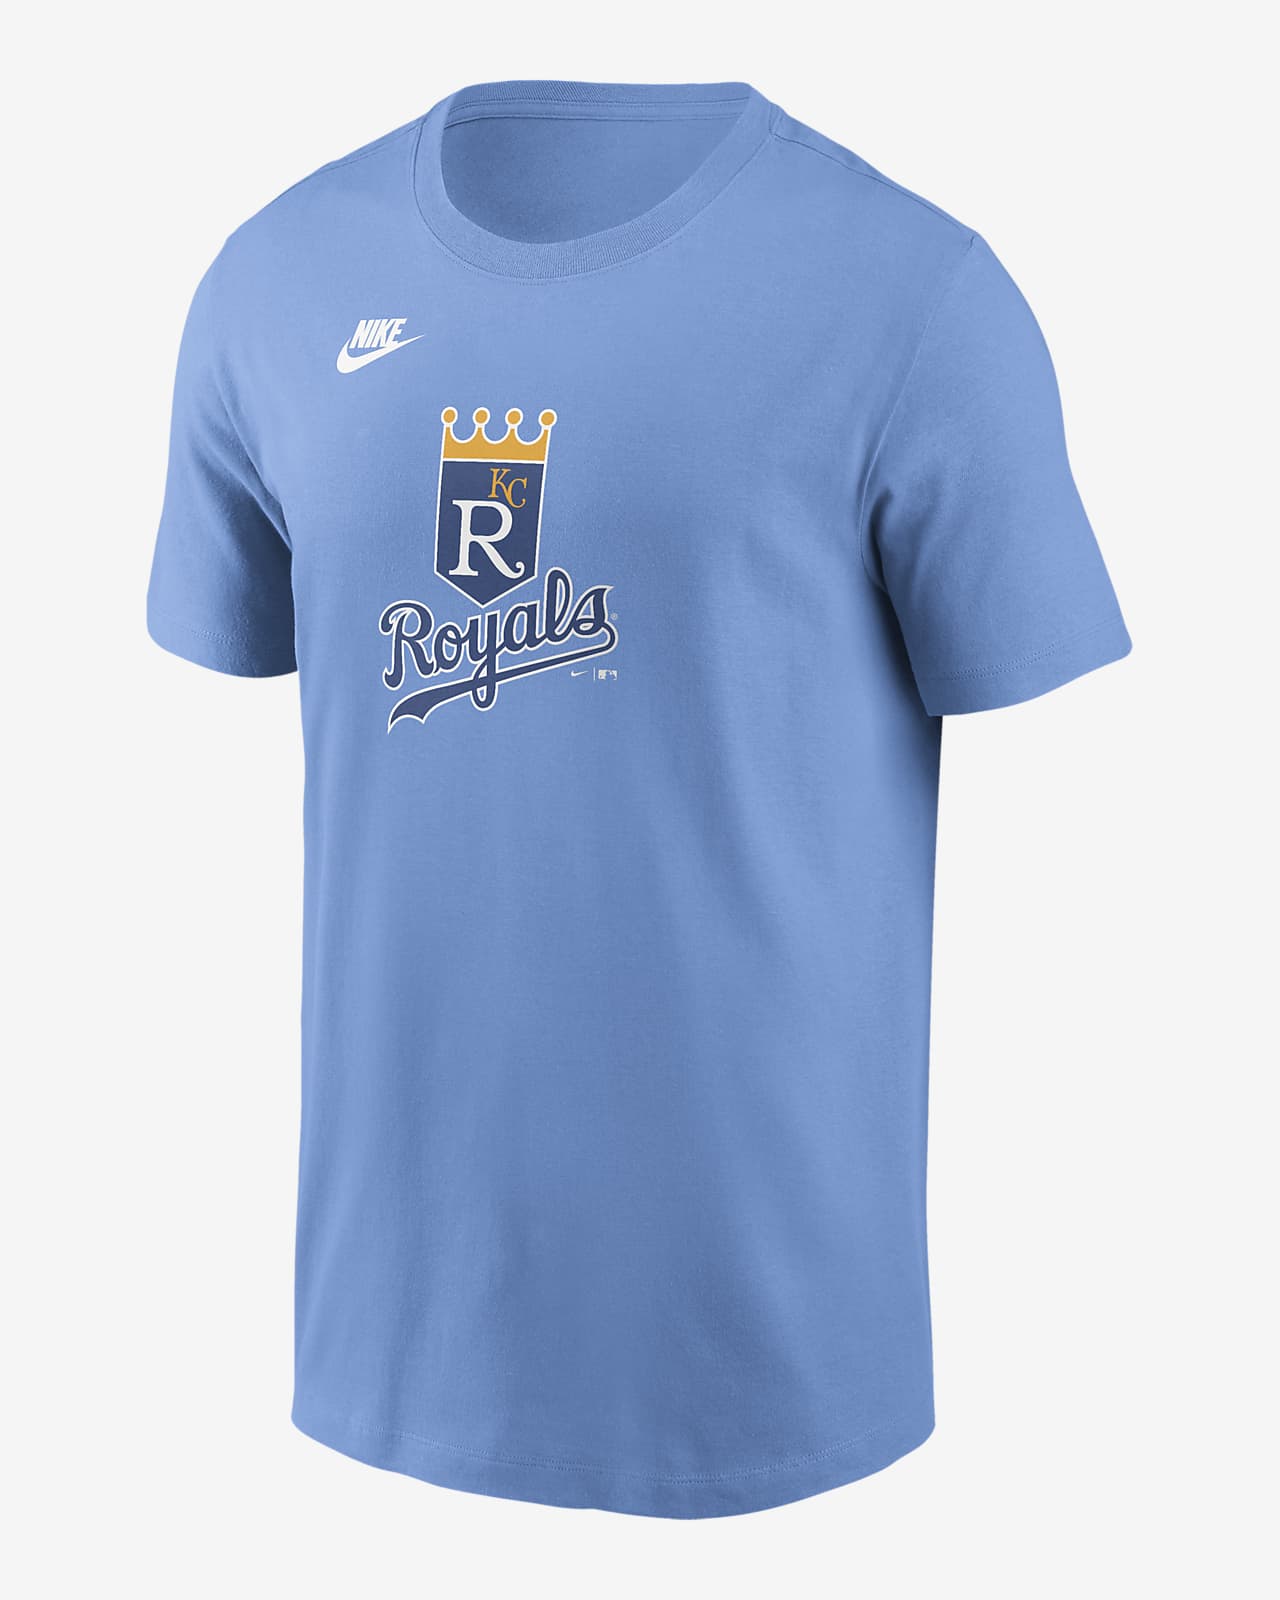 Playera Nike de la MLB para hombre Kansas City Royals Cooperstown Logo